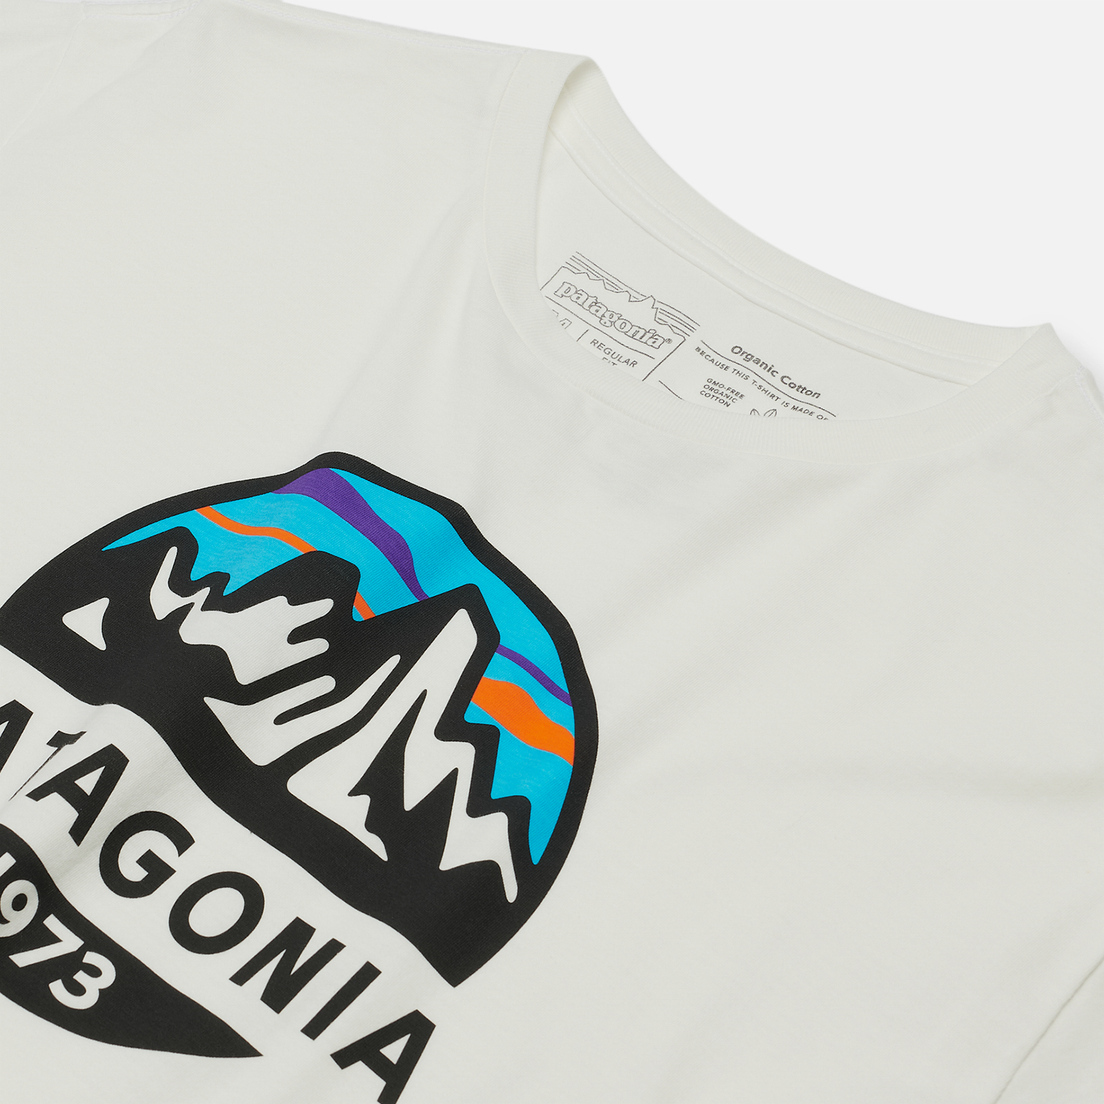 Patagonia Мужская футболка Fitz Roy Scope Organic